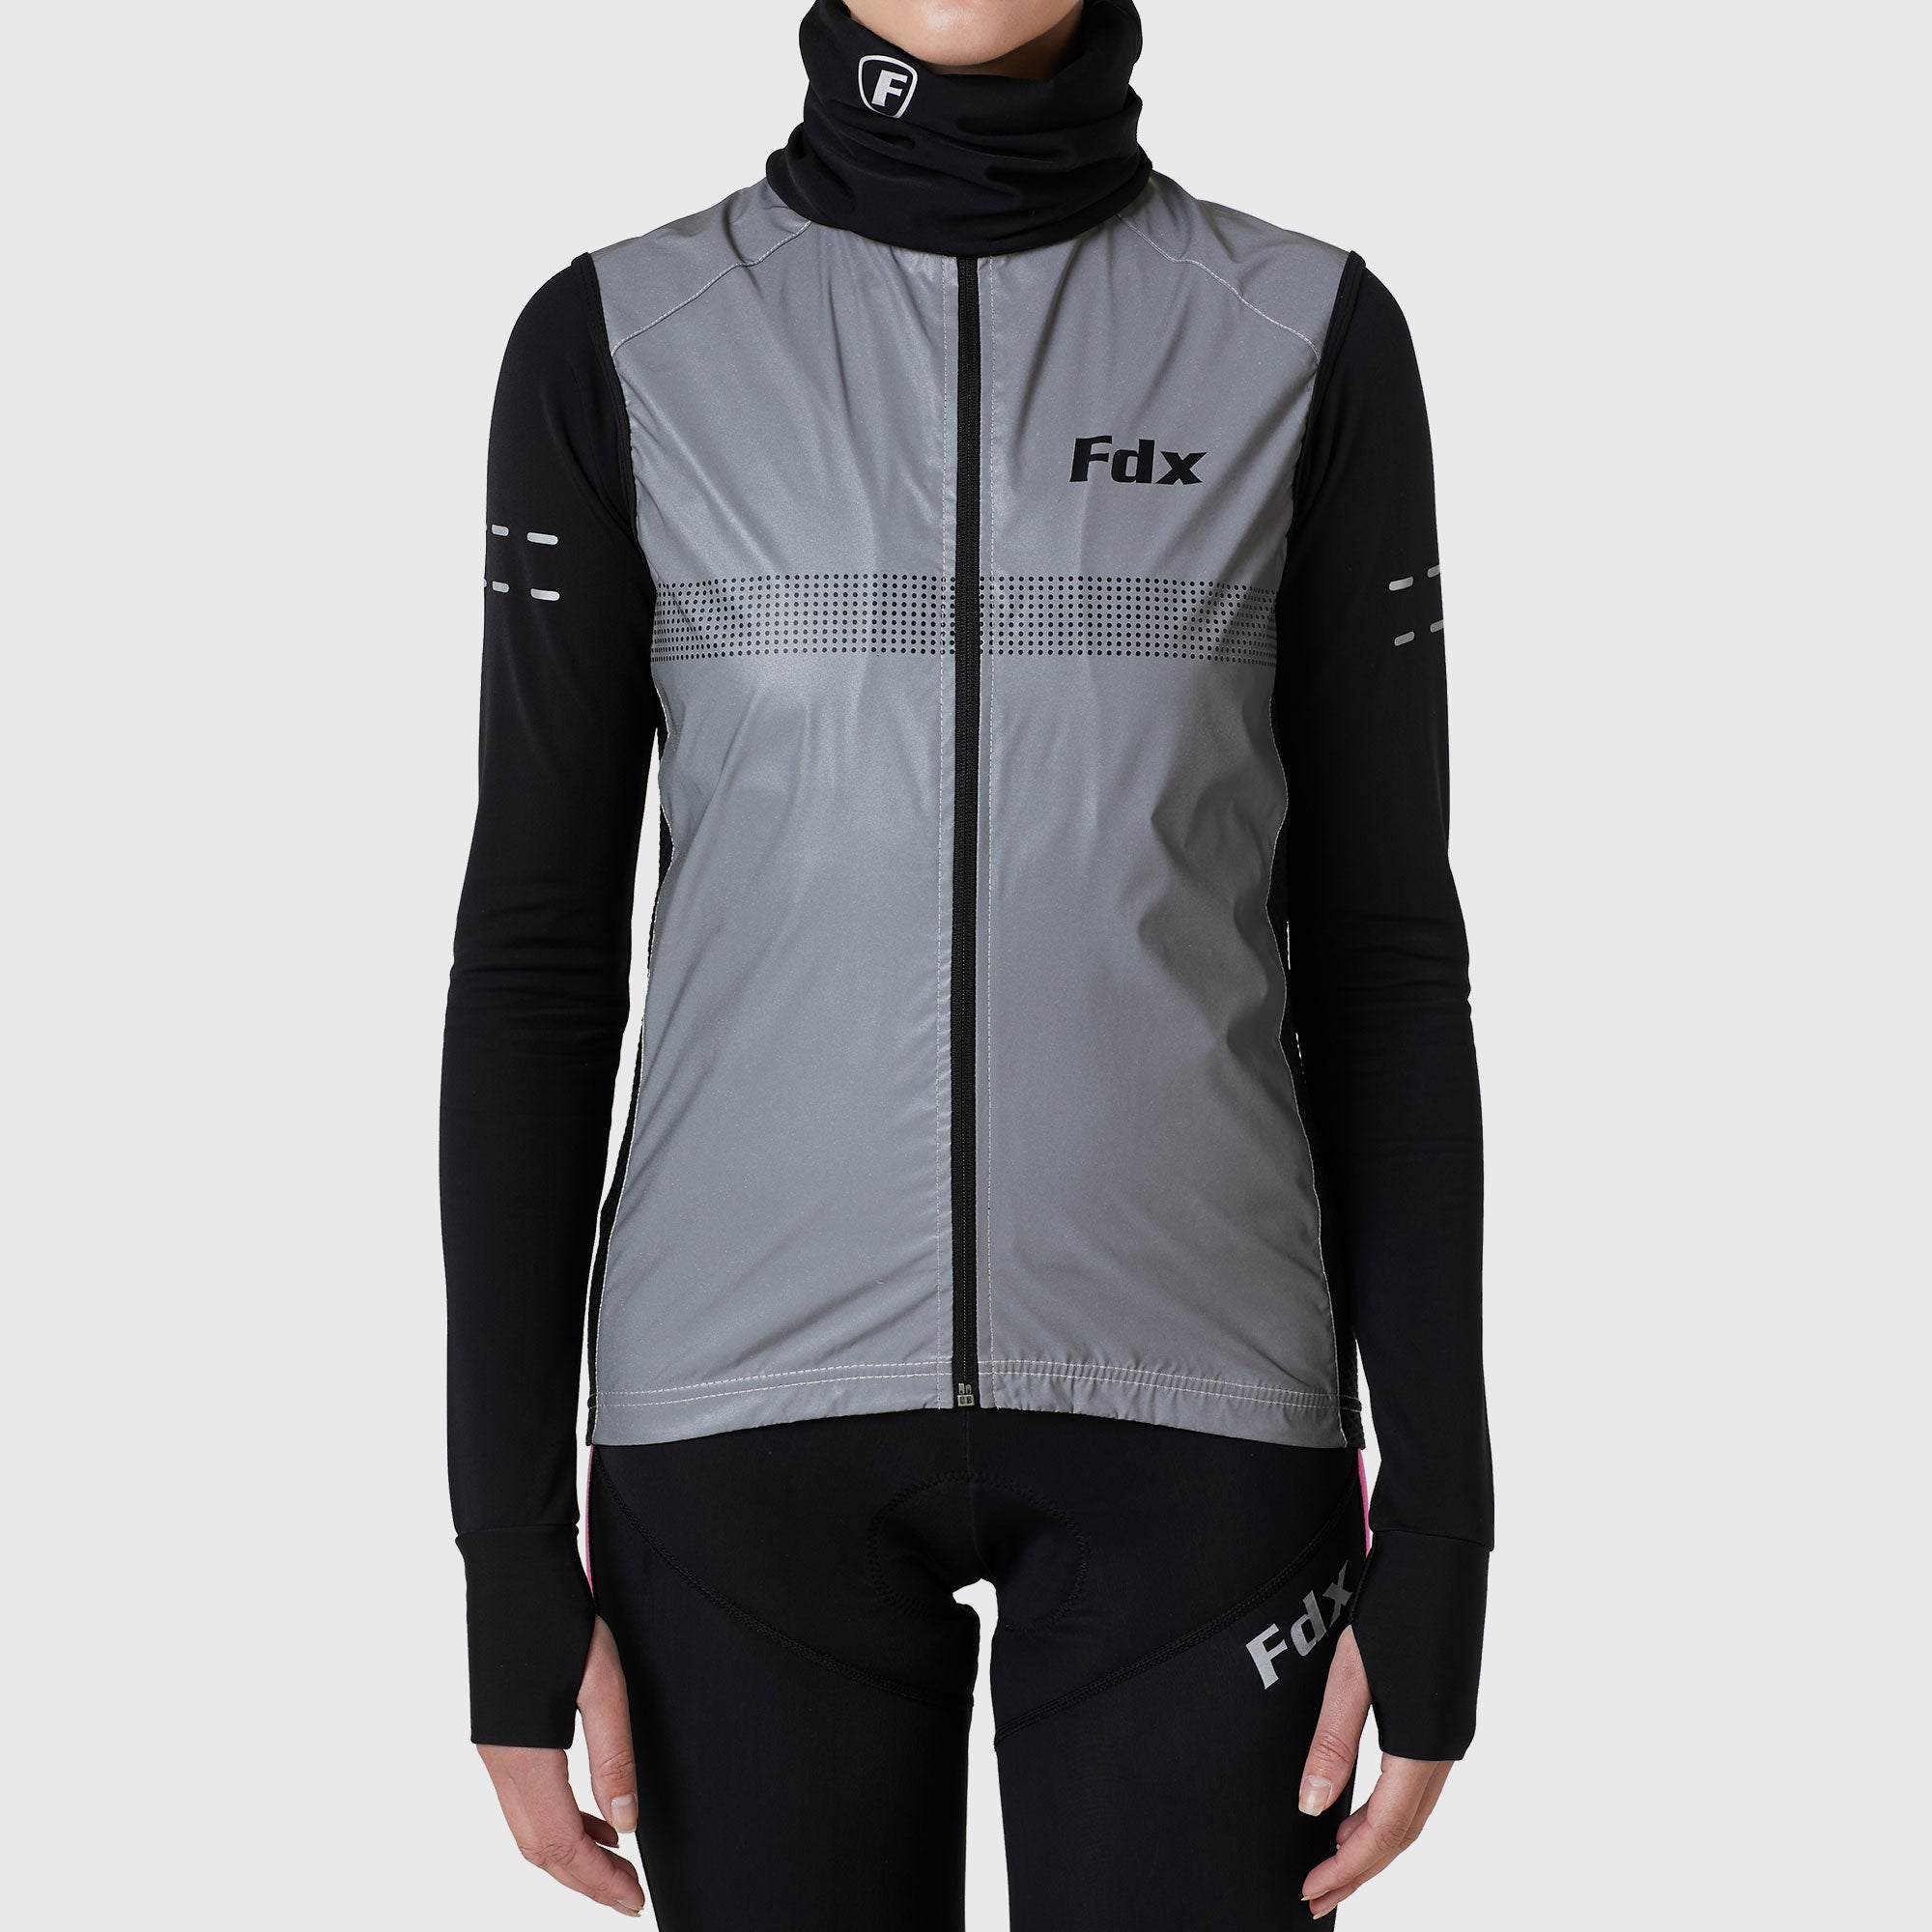 Women’s Grey & Black hi viz cycling gilet windproof breathable quick dry MTB rain vest, lightweight packable 360 reflective rain top for riding